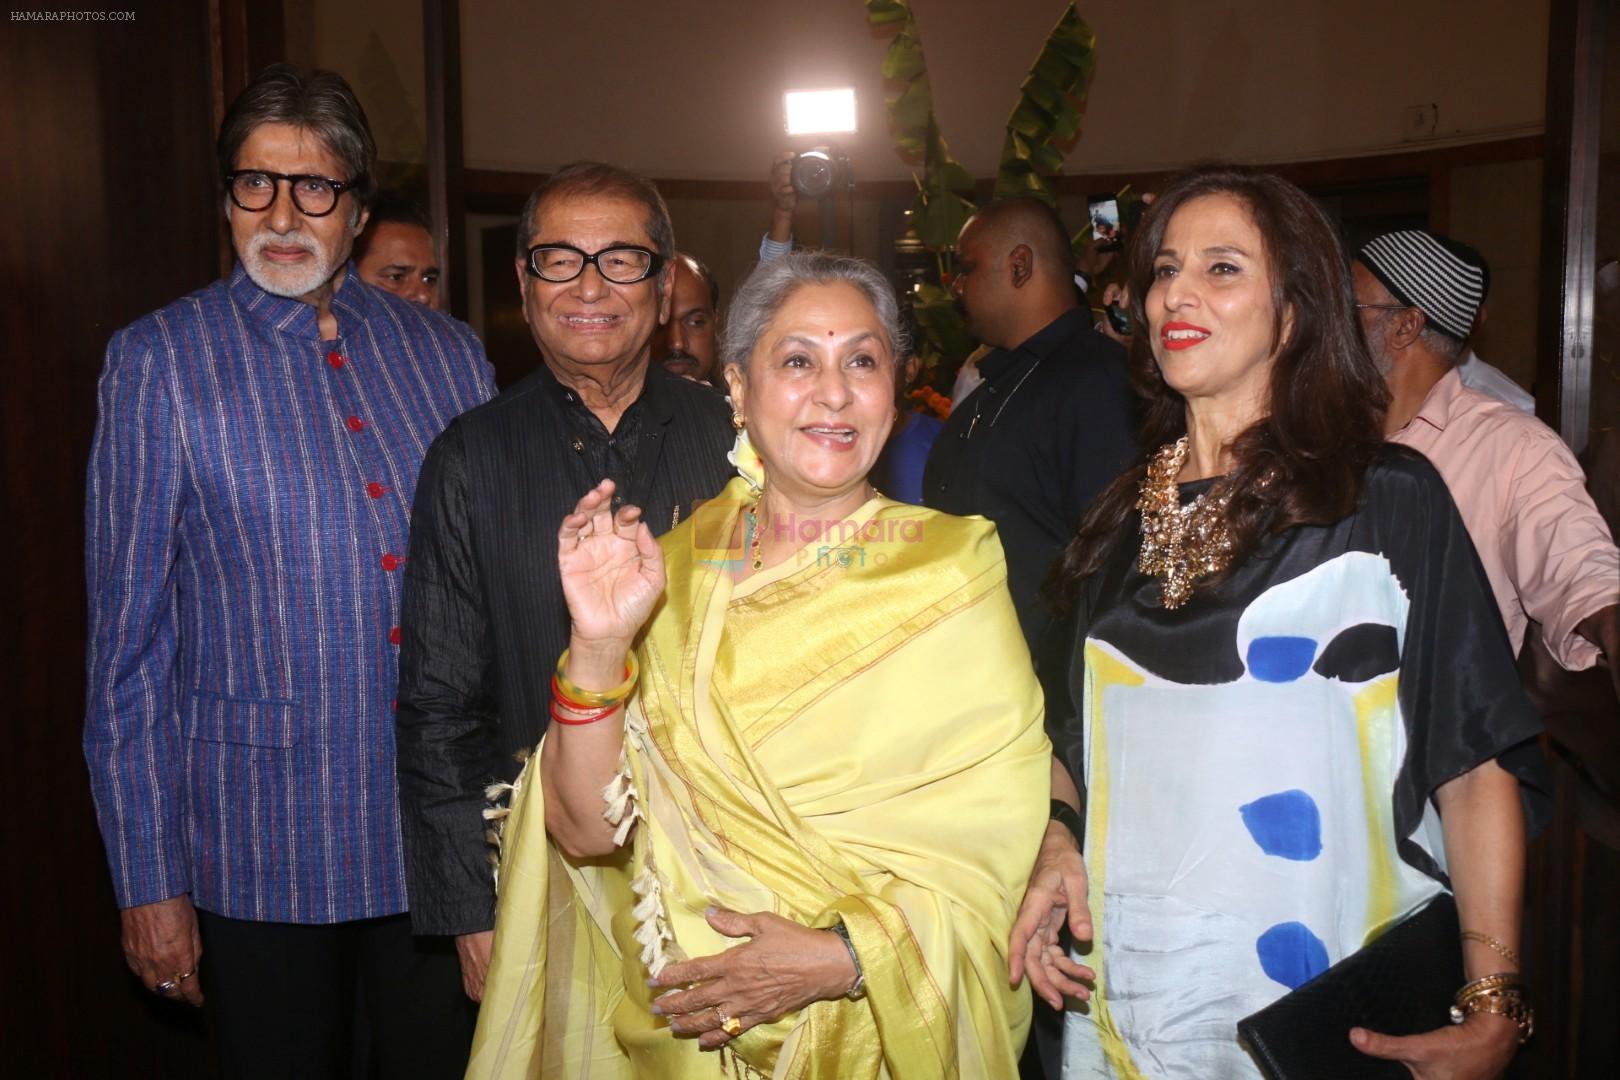 Amitabh Bachchan, Jaya Bachchan, Shobhaa De At Opening Preview Of Dilip De's Art Exhibition on 26th Jan 2018